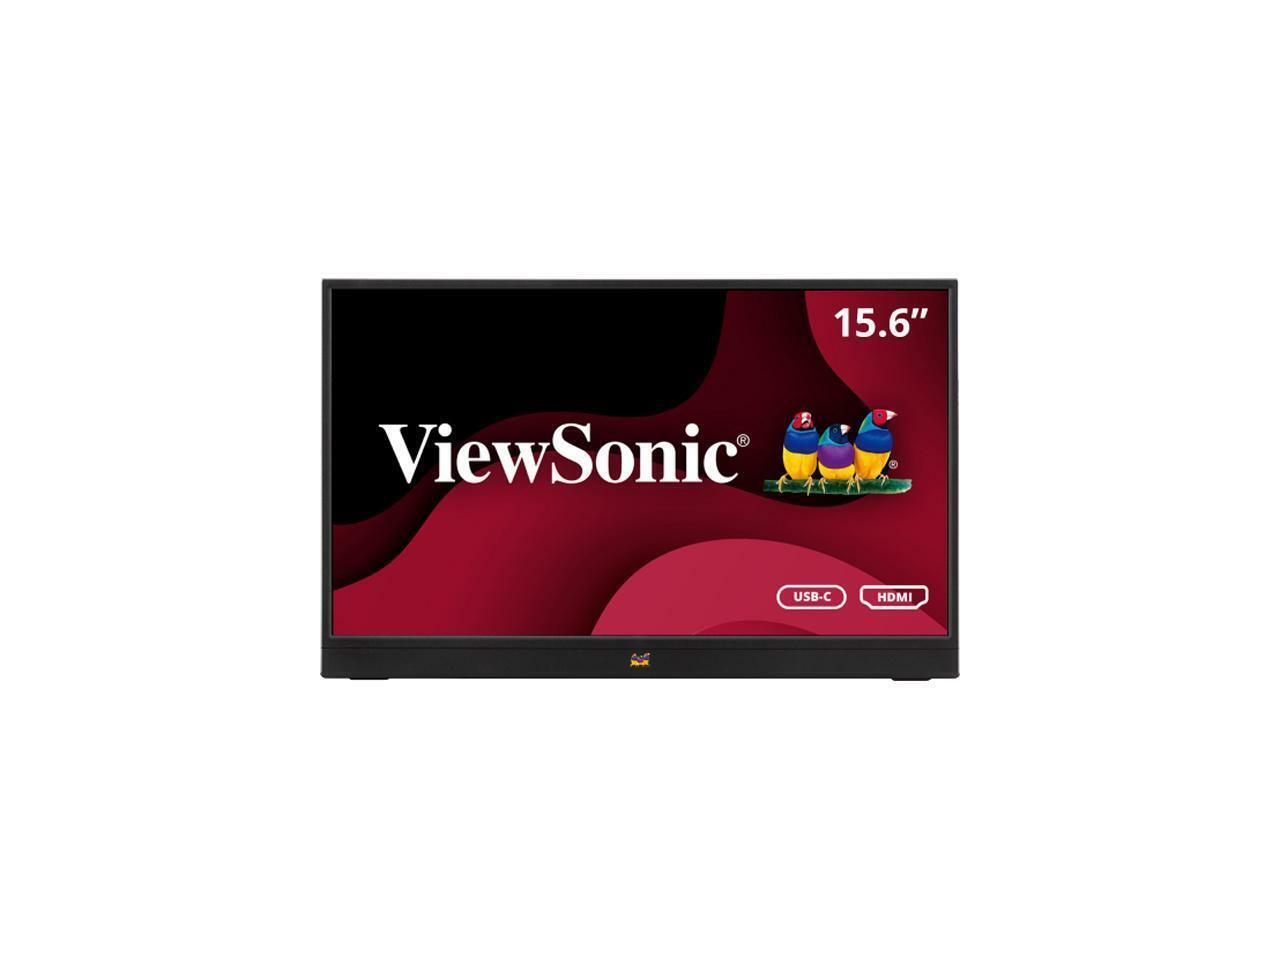 ViewSonic VA1655 15.6 Inch 1080p Portable IPS Monitor with Mobile Ergonomics, US